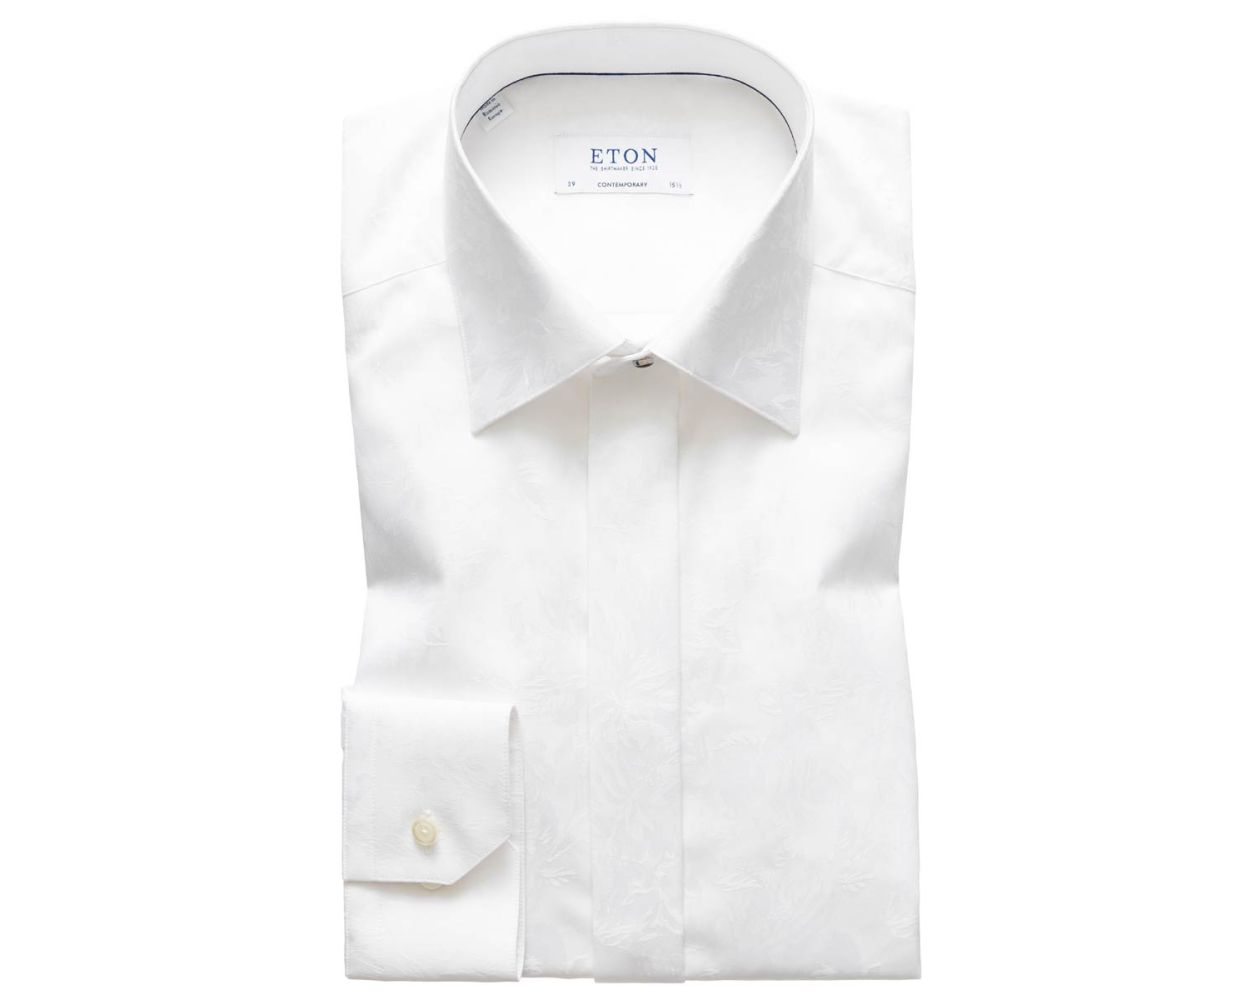 Eton White Jacquard Tuxedo Shirt Contemporary Fit